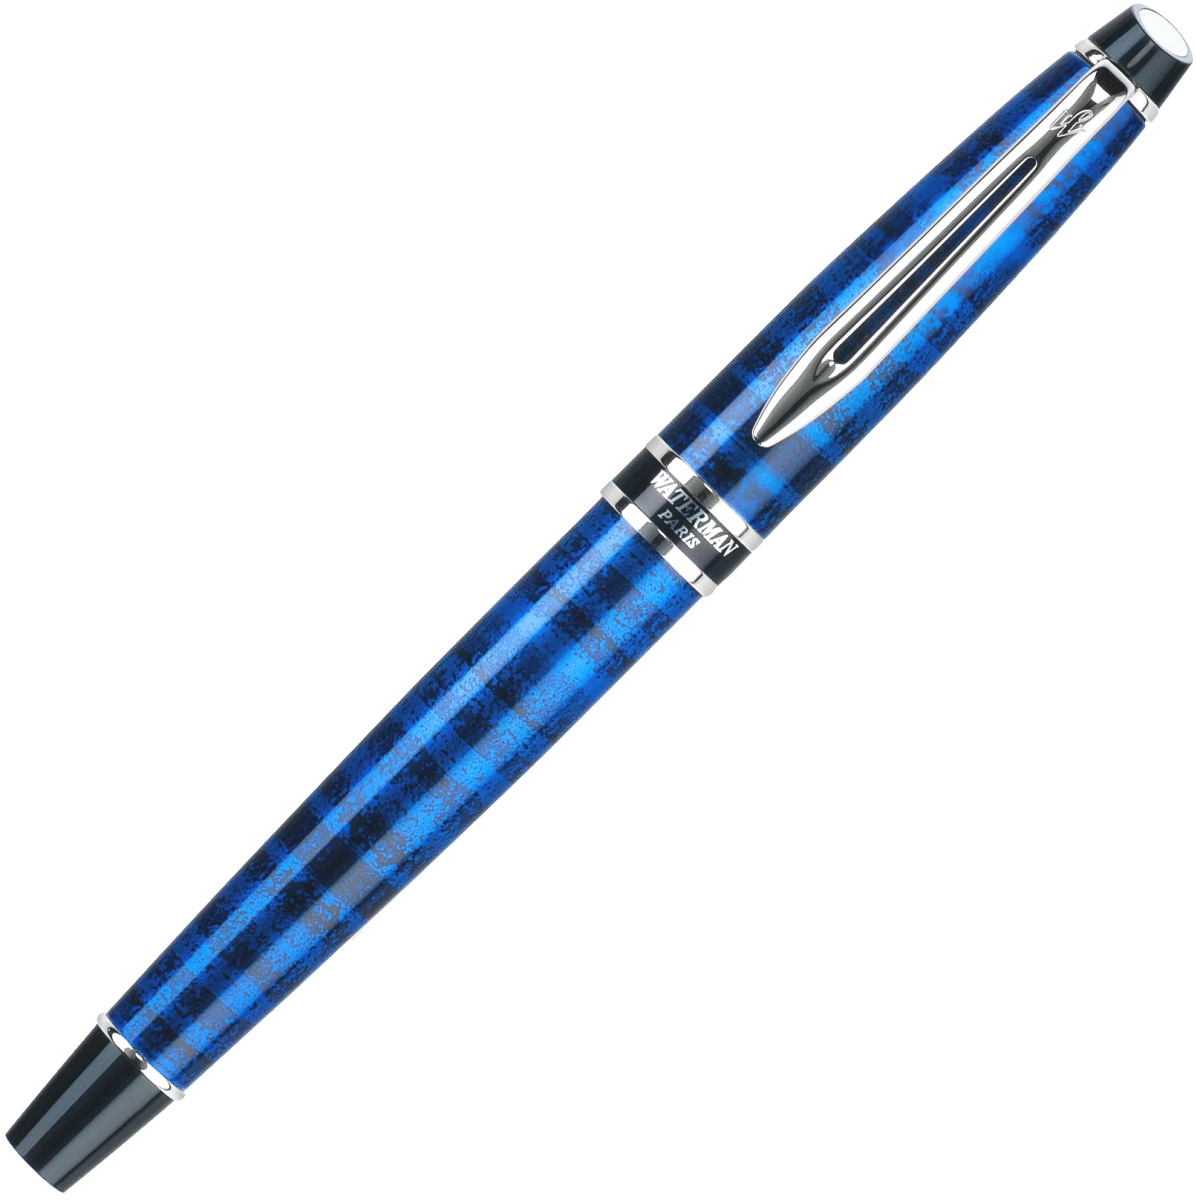  Ручка перьевая Waterman Expert 2, Sublimated Blue CT (Перо F), фото 2